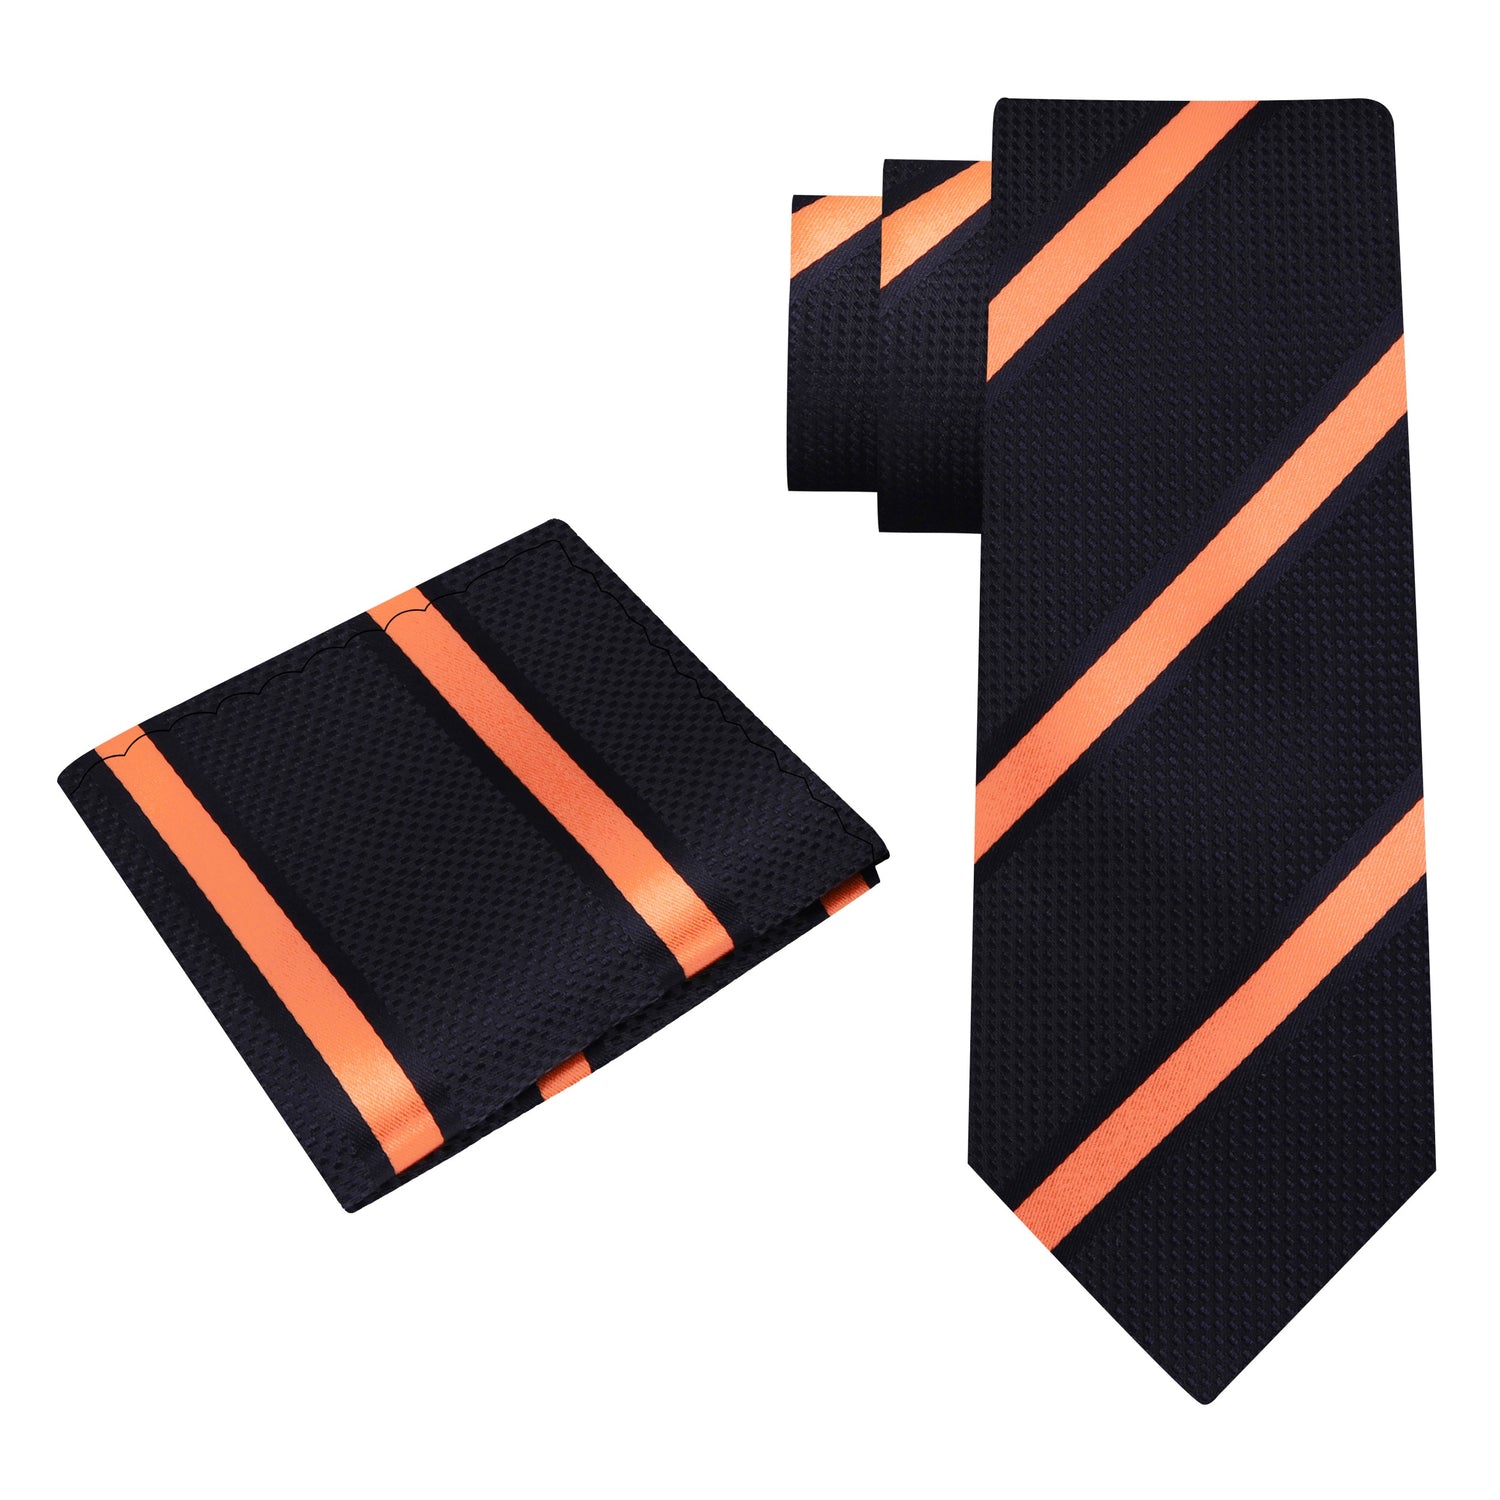 View 2: Black, Orange Stripe Tie and Matching Square ||Black, Orange